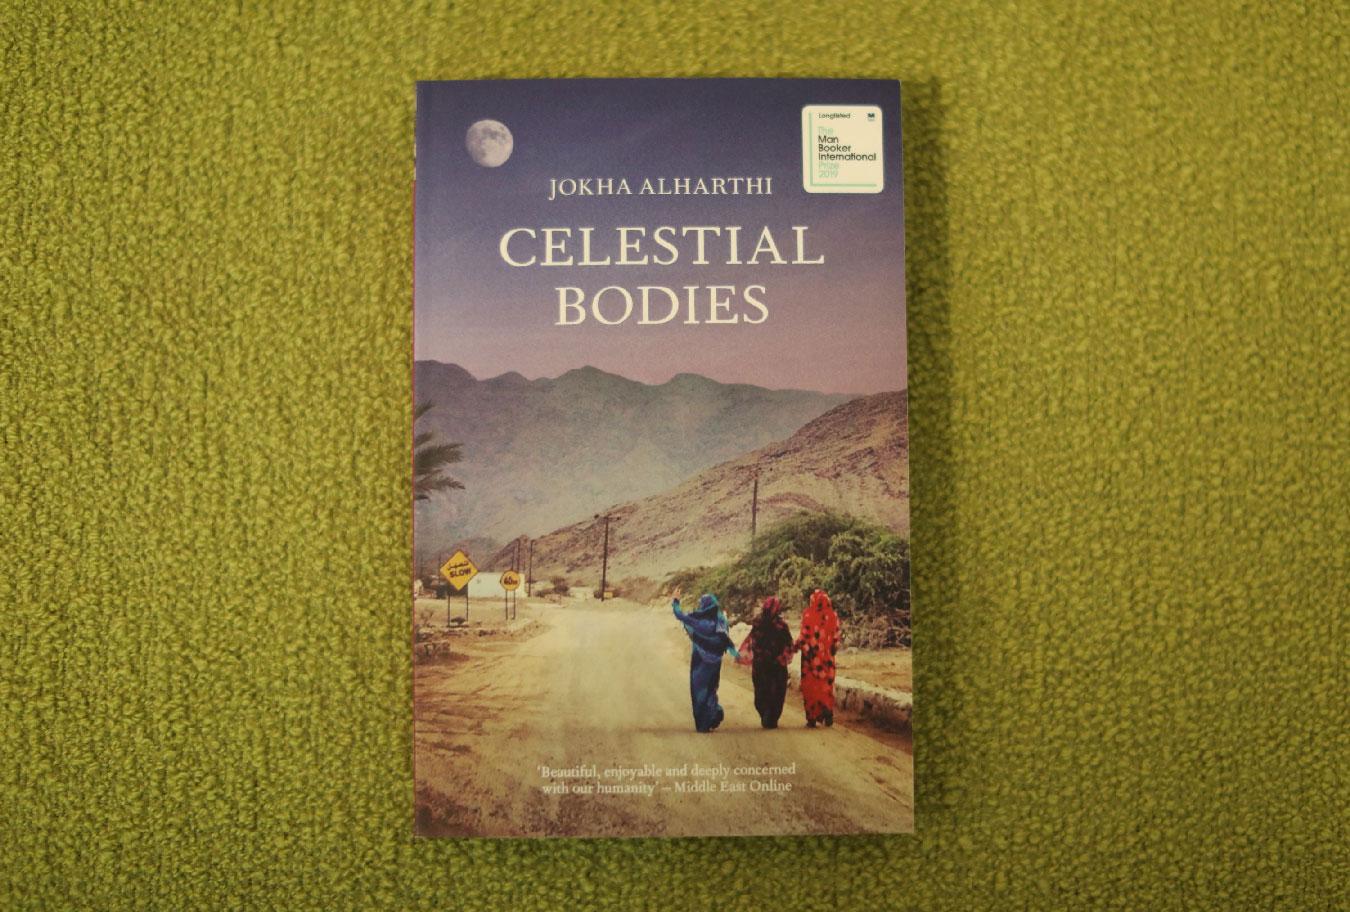 A copy of 'Celestial Bodies' by Arabic author Jokha Alharthi